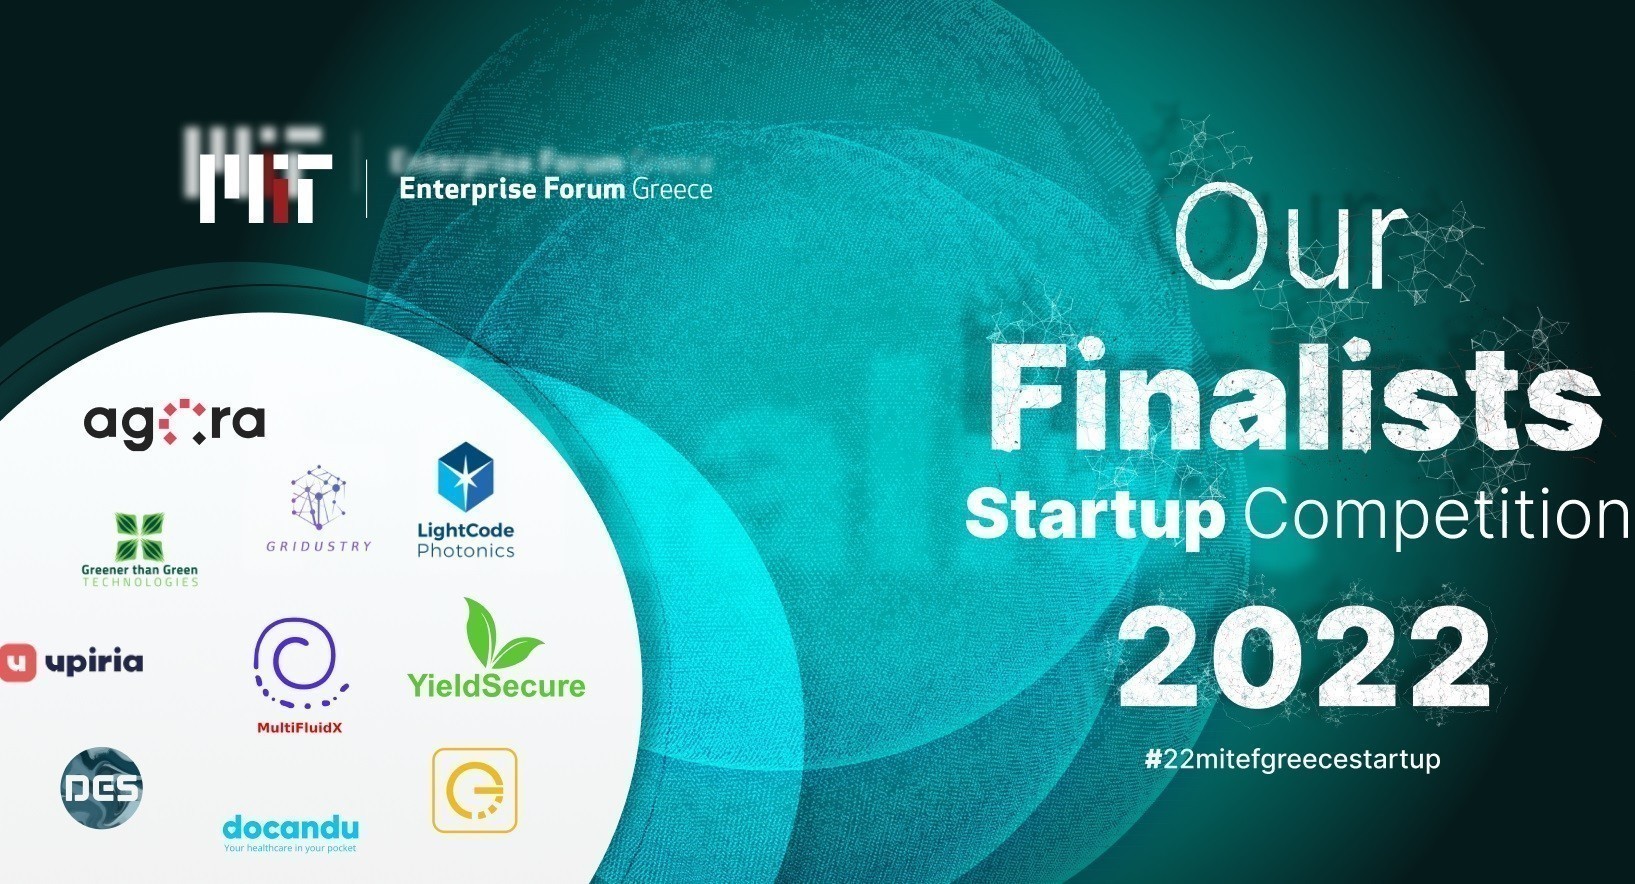 MIT Enterprise Forum Greece: Ποιες είναι οι 10 φιναλίστ startups του φετινού διαγωνισμού (pic)